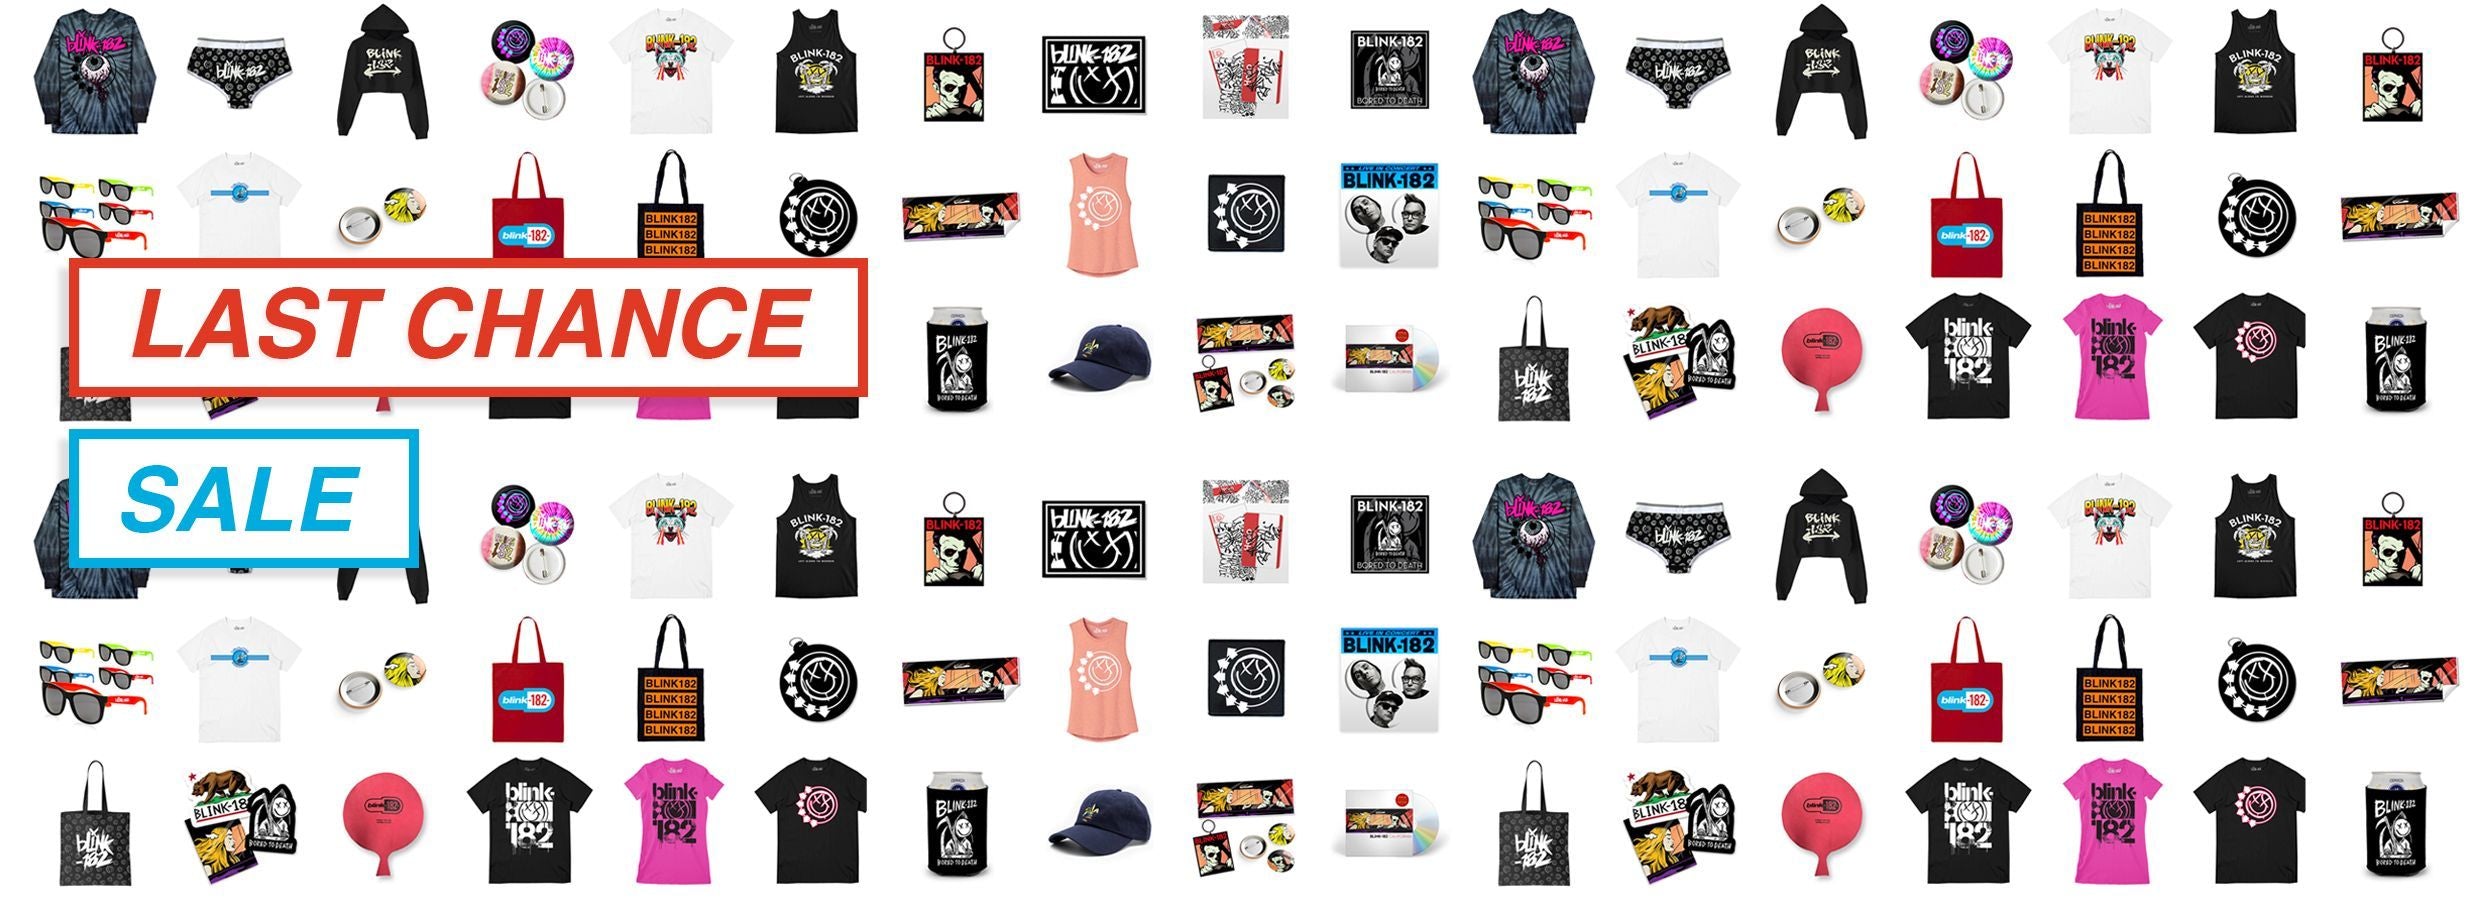 Blink 182 100 Official Online Merchandise Store Blink 182 Us